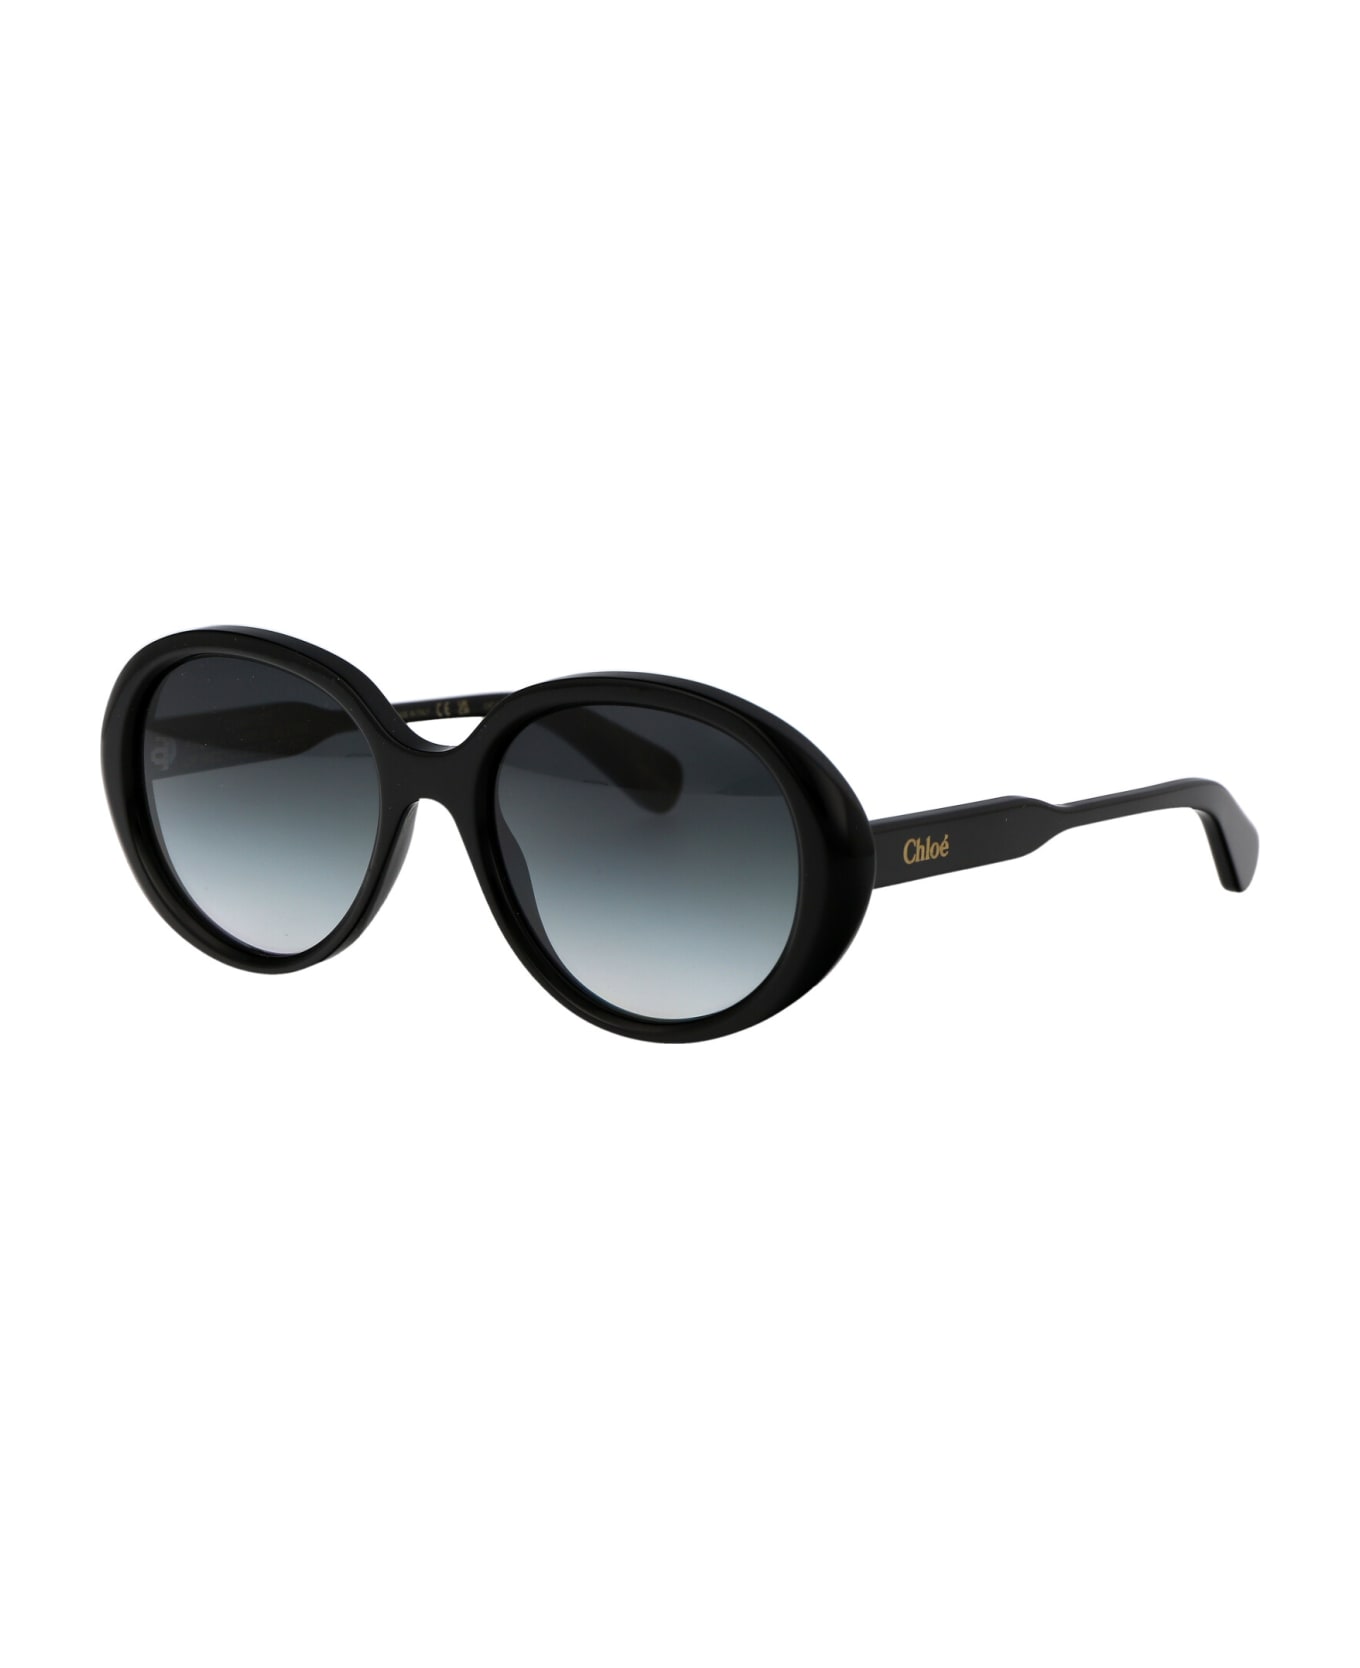 Chloé Eyewear Ch0221s Sunglasses - 001 BLACK BLACK GREY